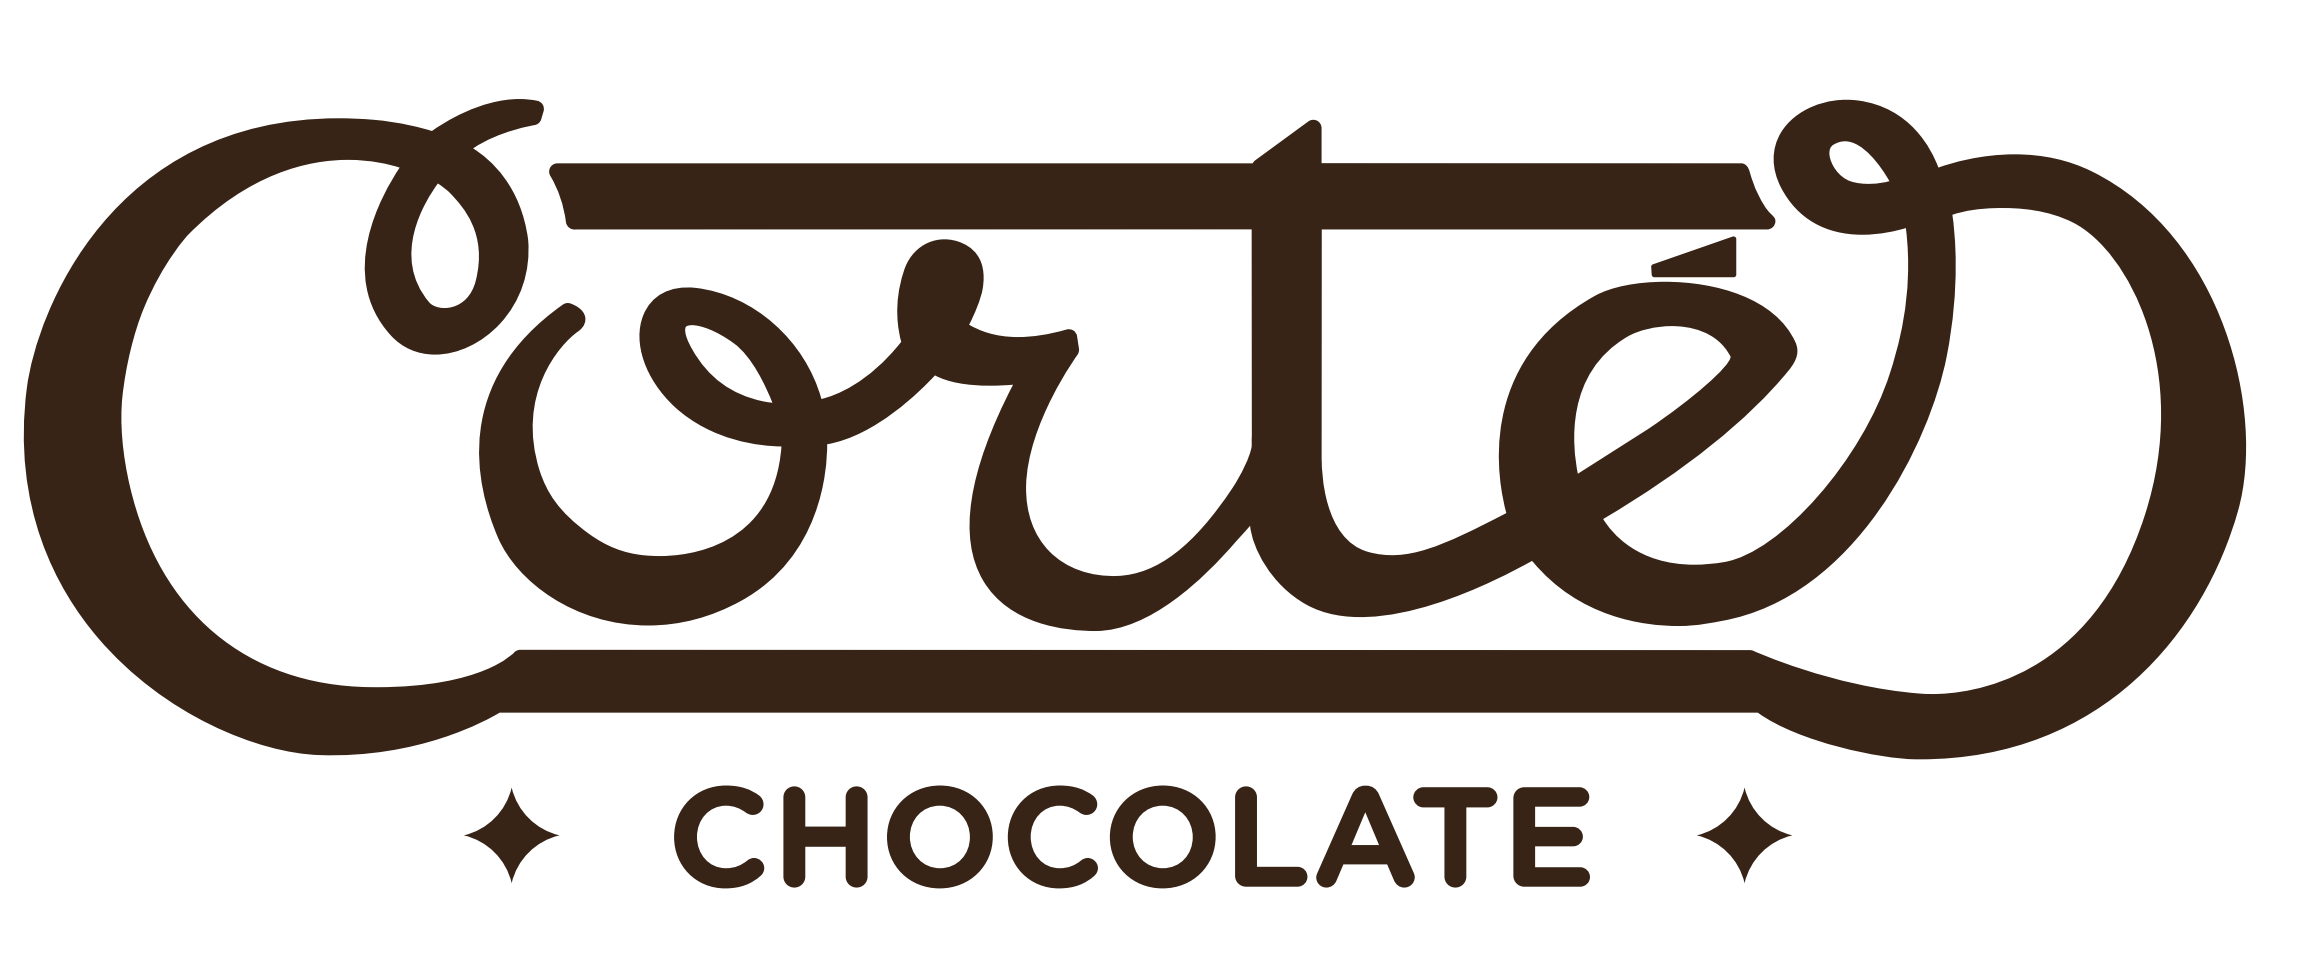 Chocolates Cortés logo